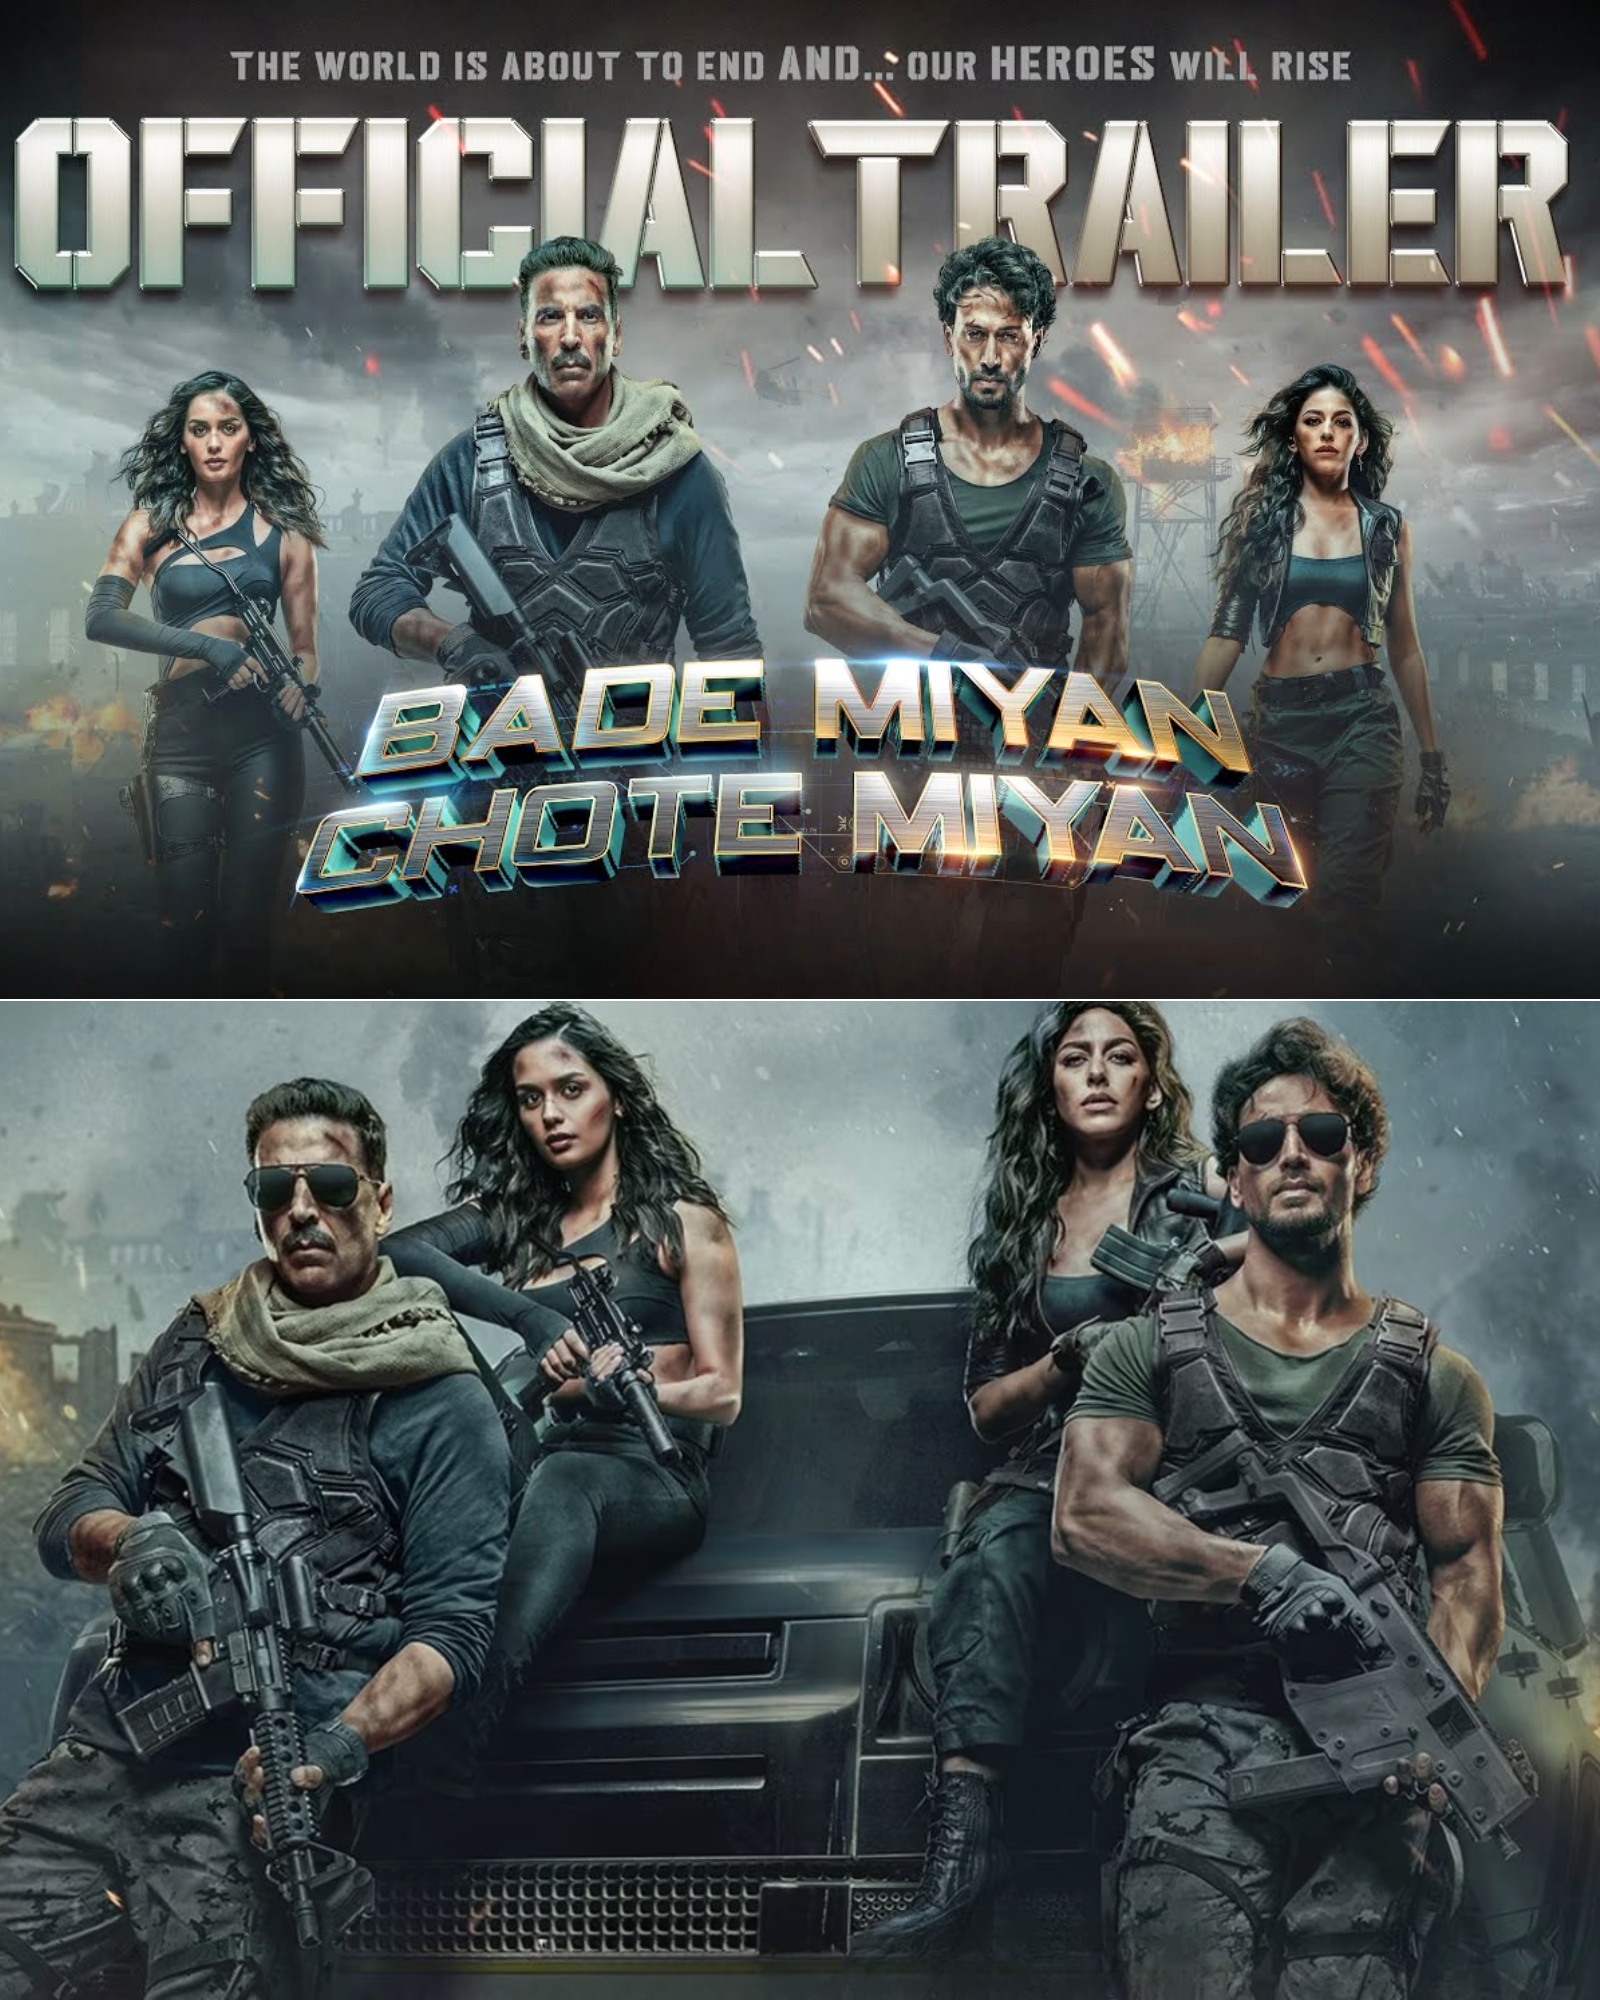 Cover Image for Bade Miyan Chote Miyan | Official Trailer | Akshay Kumar, Tiger Shroff, Prithviraj, Sonakshi Sinha